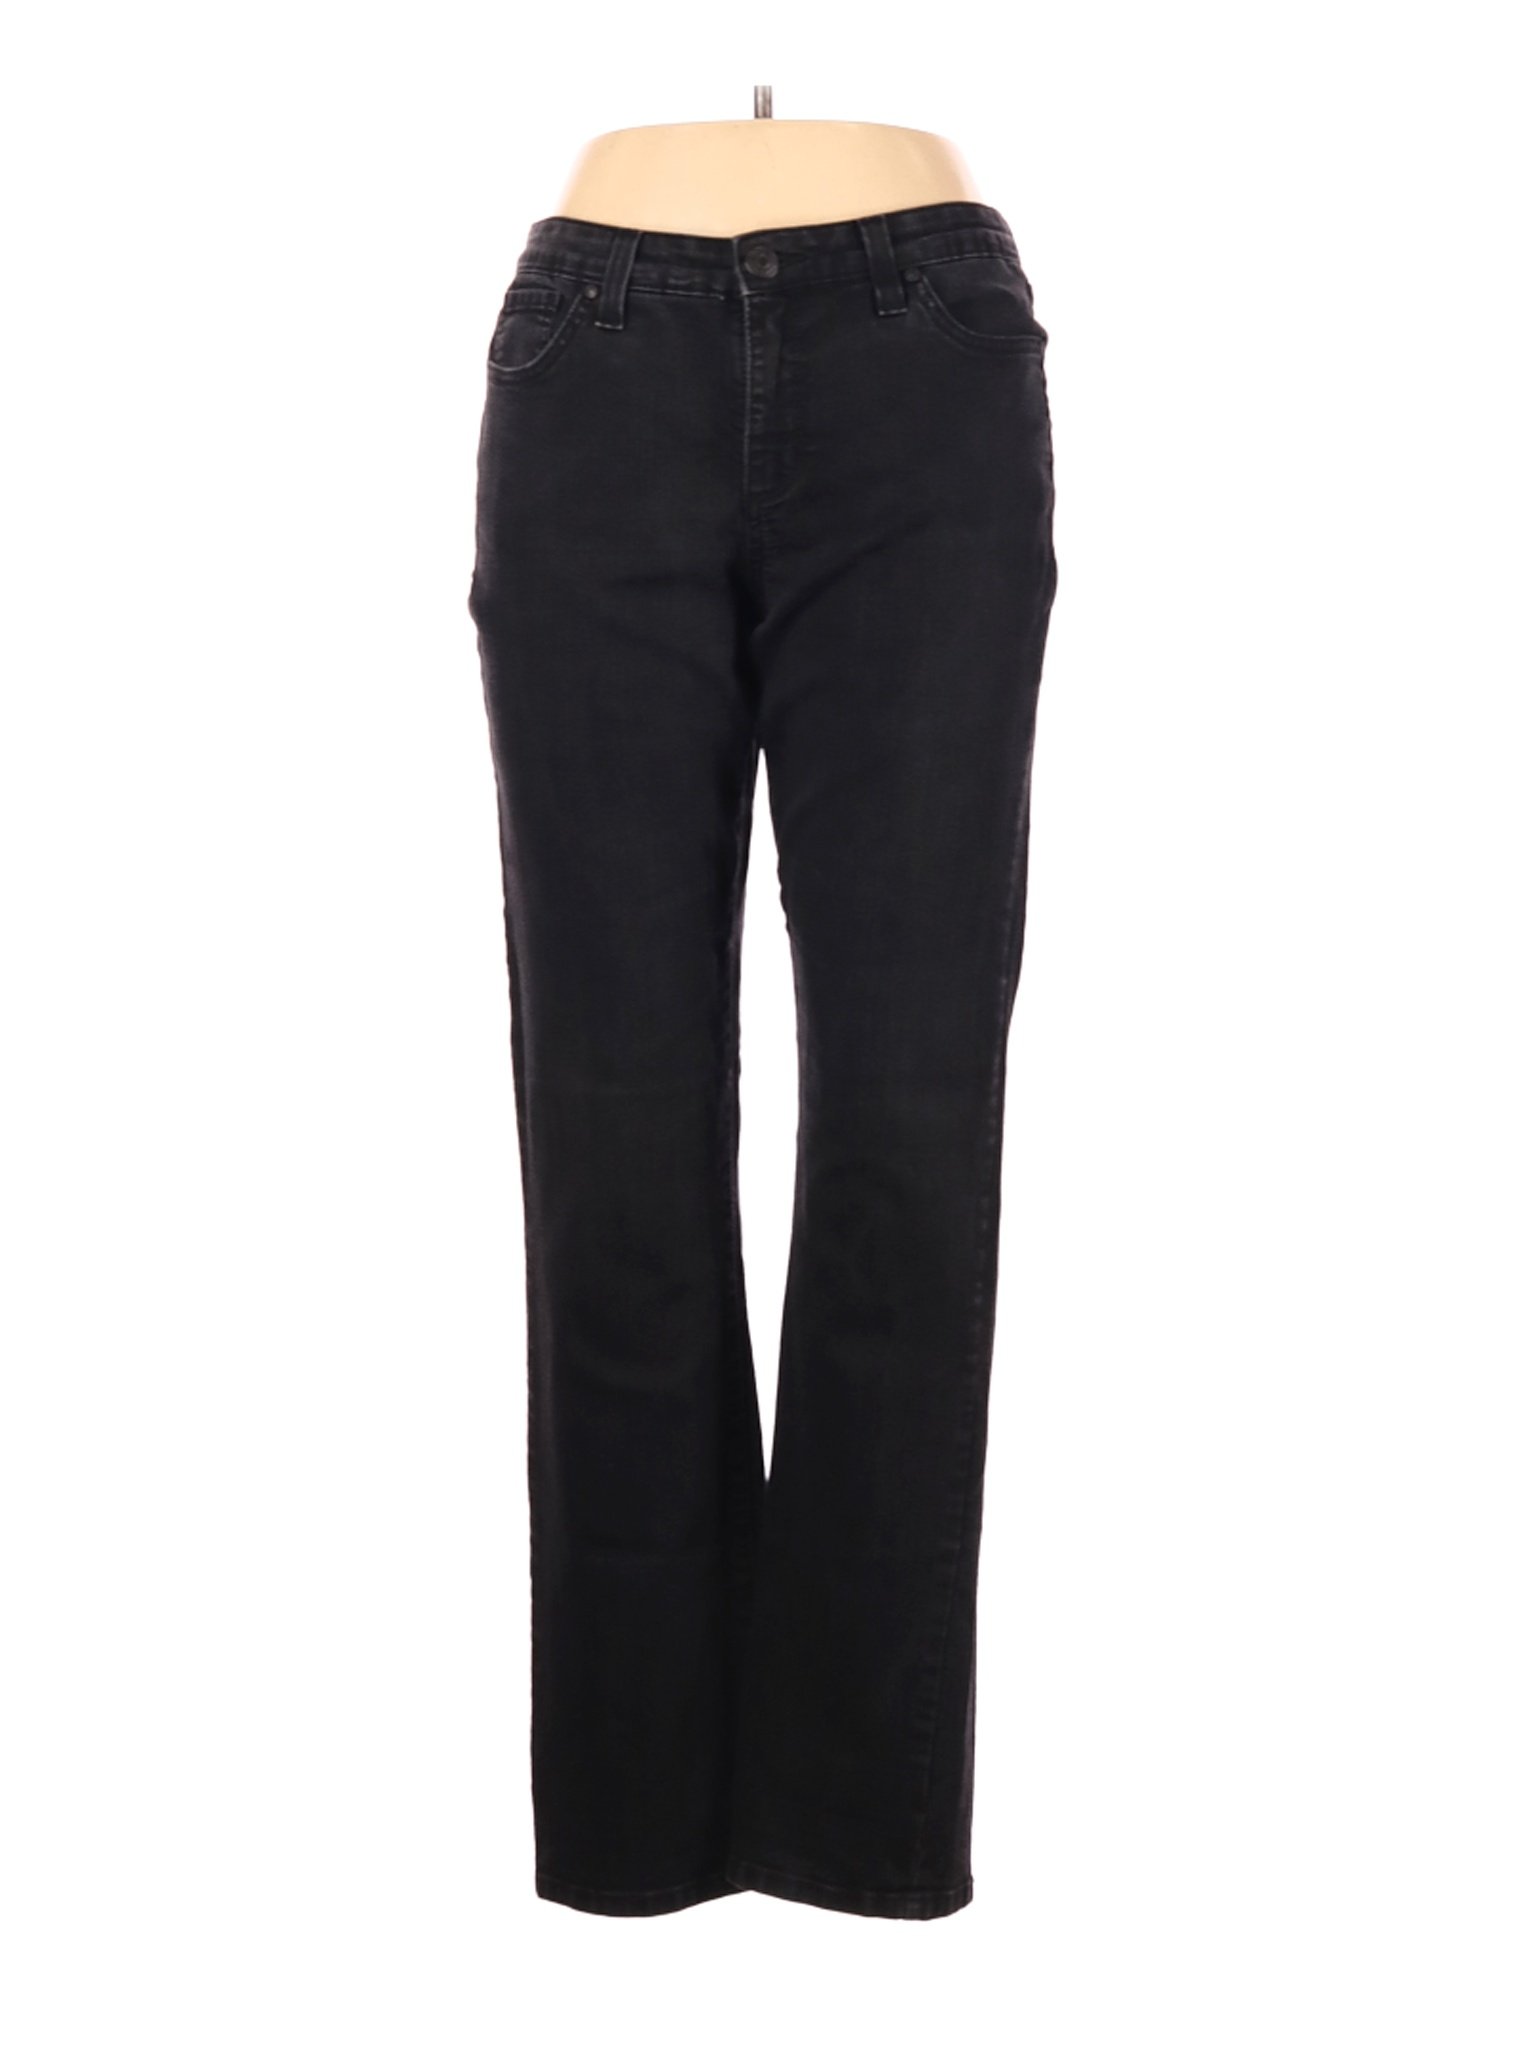 Nine West Vintage America Women Black Jeans 12 | eBay